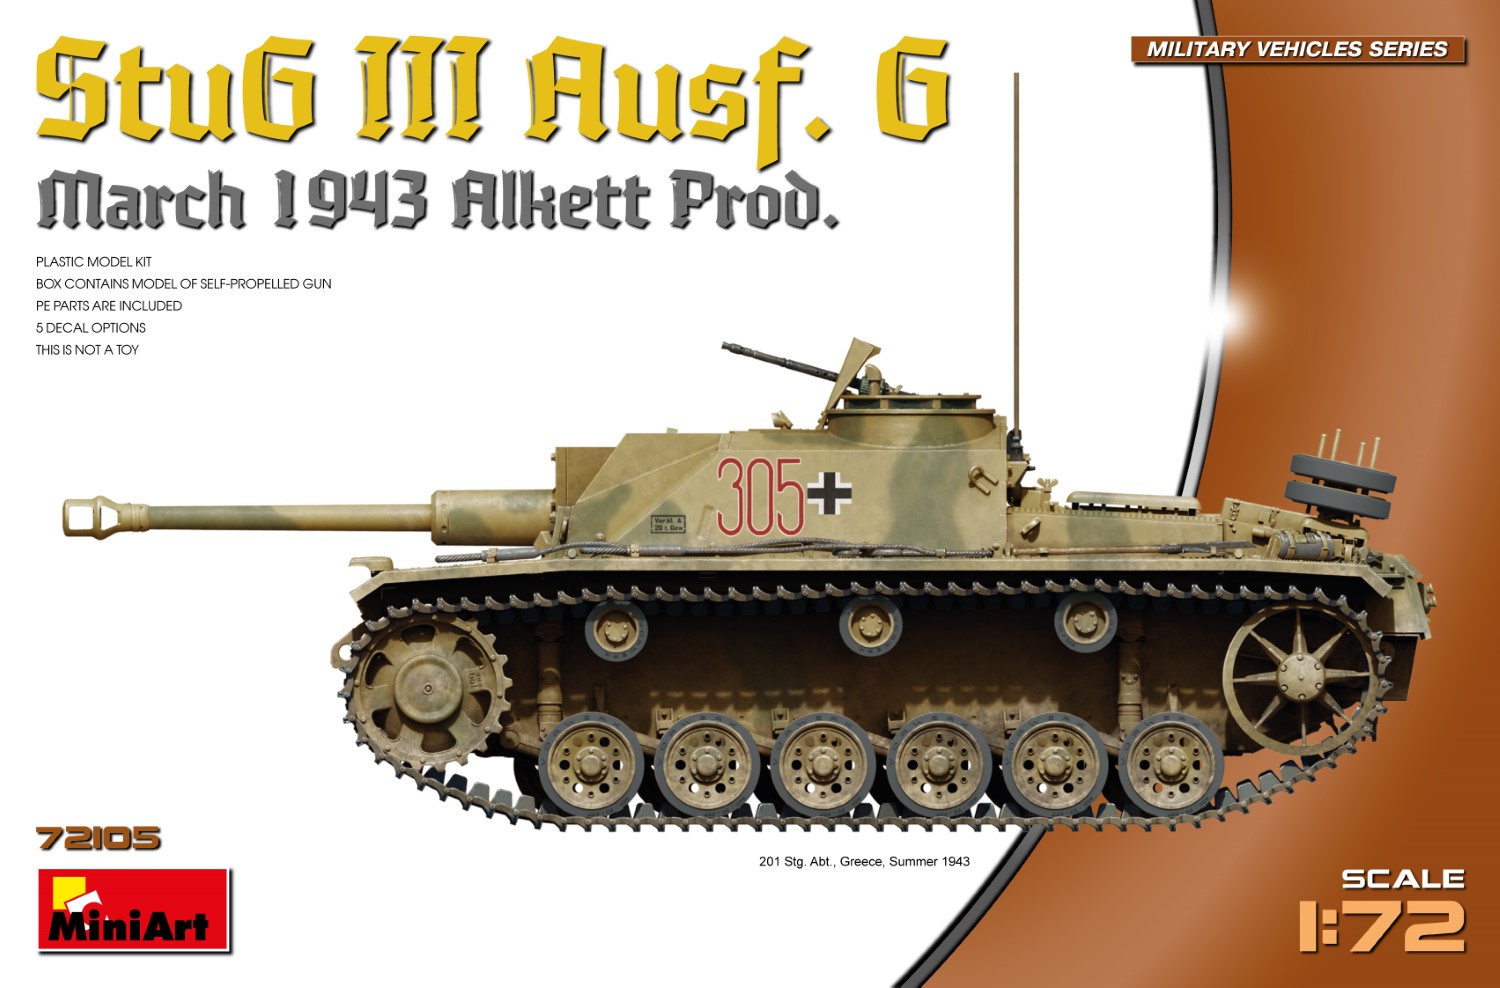 StuG III Ausf.G Alkett prod. March 1943